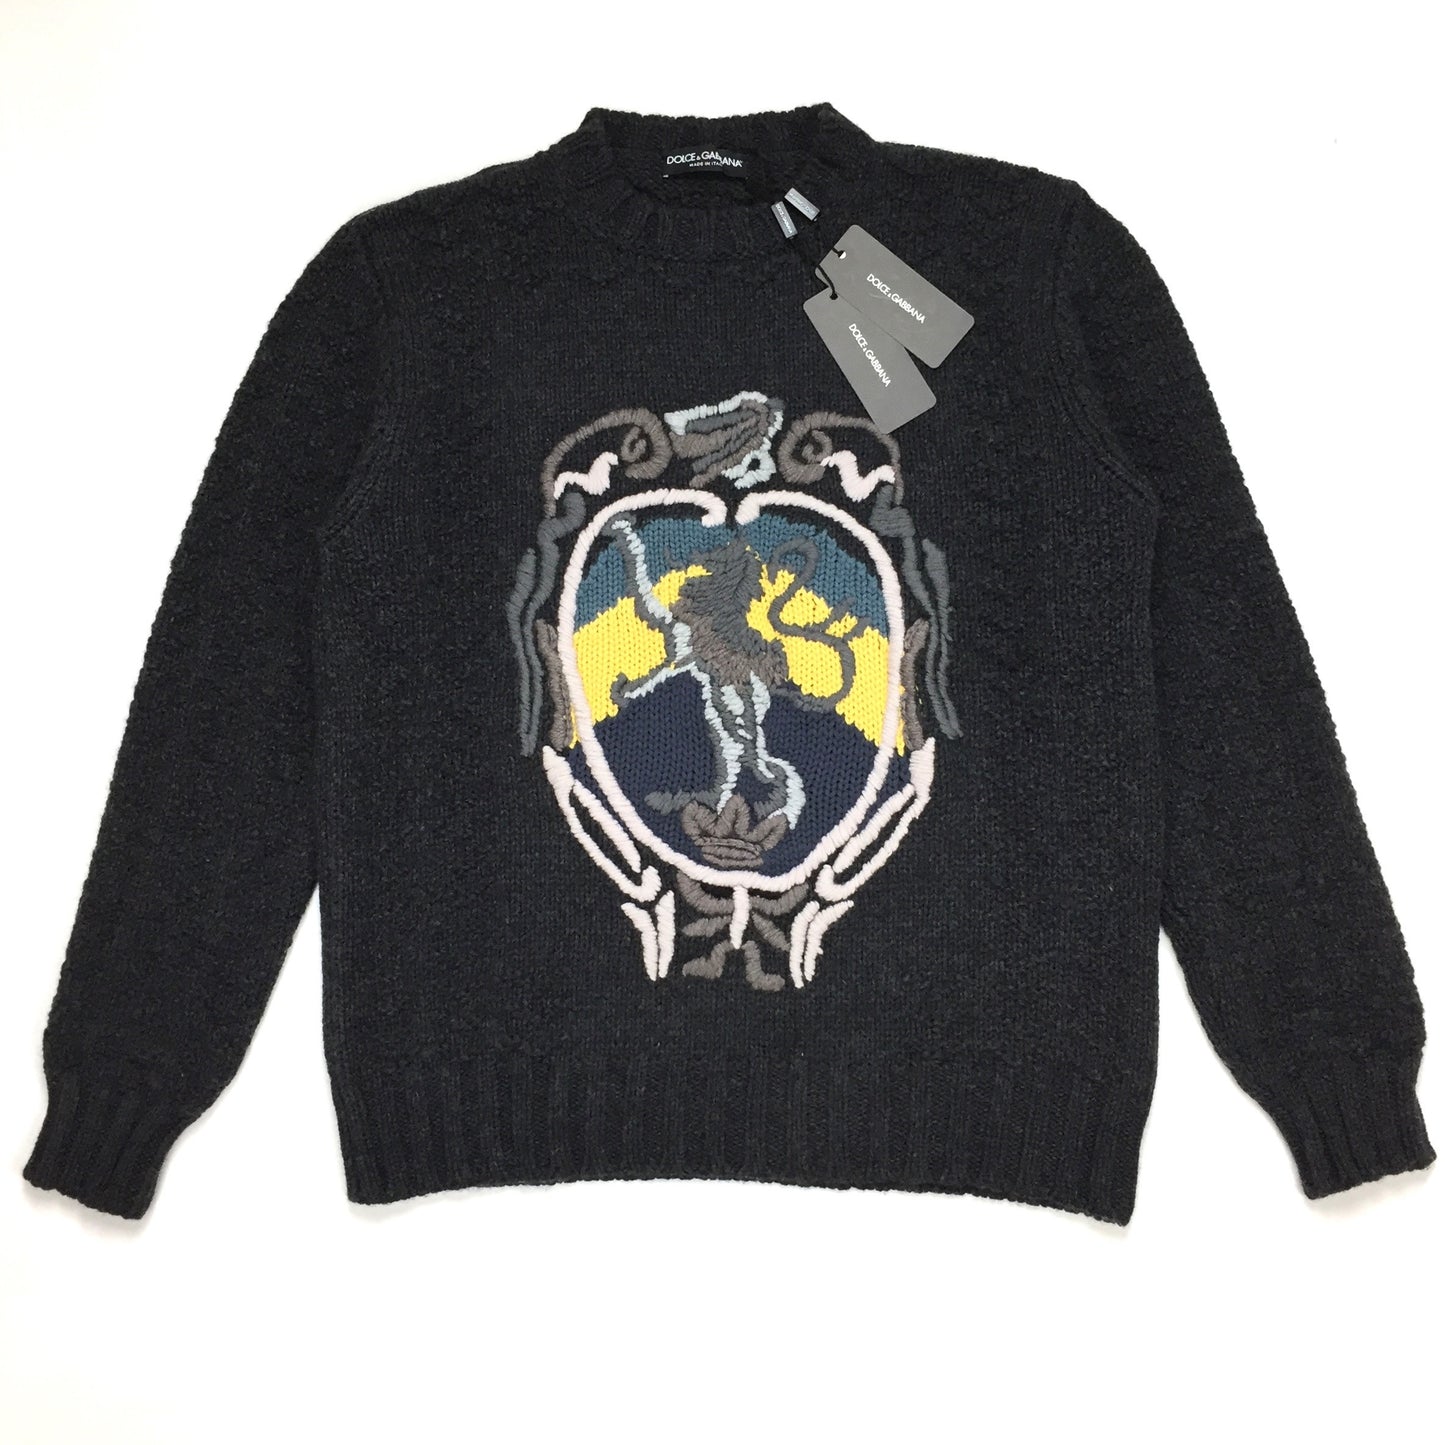 Dolce & Gabbana - Coat of Arms Intarsia Sweater